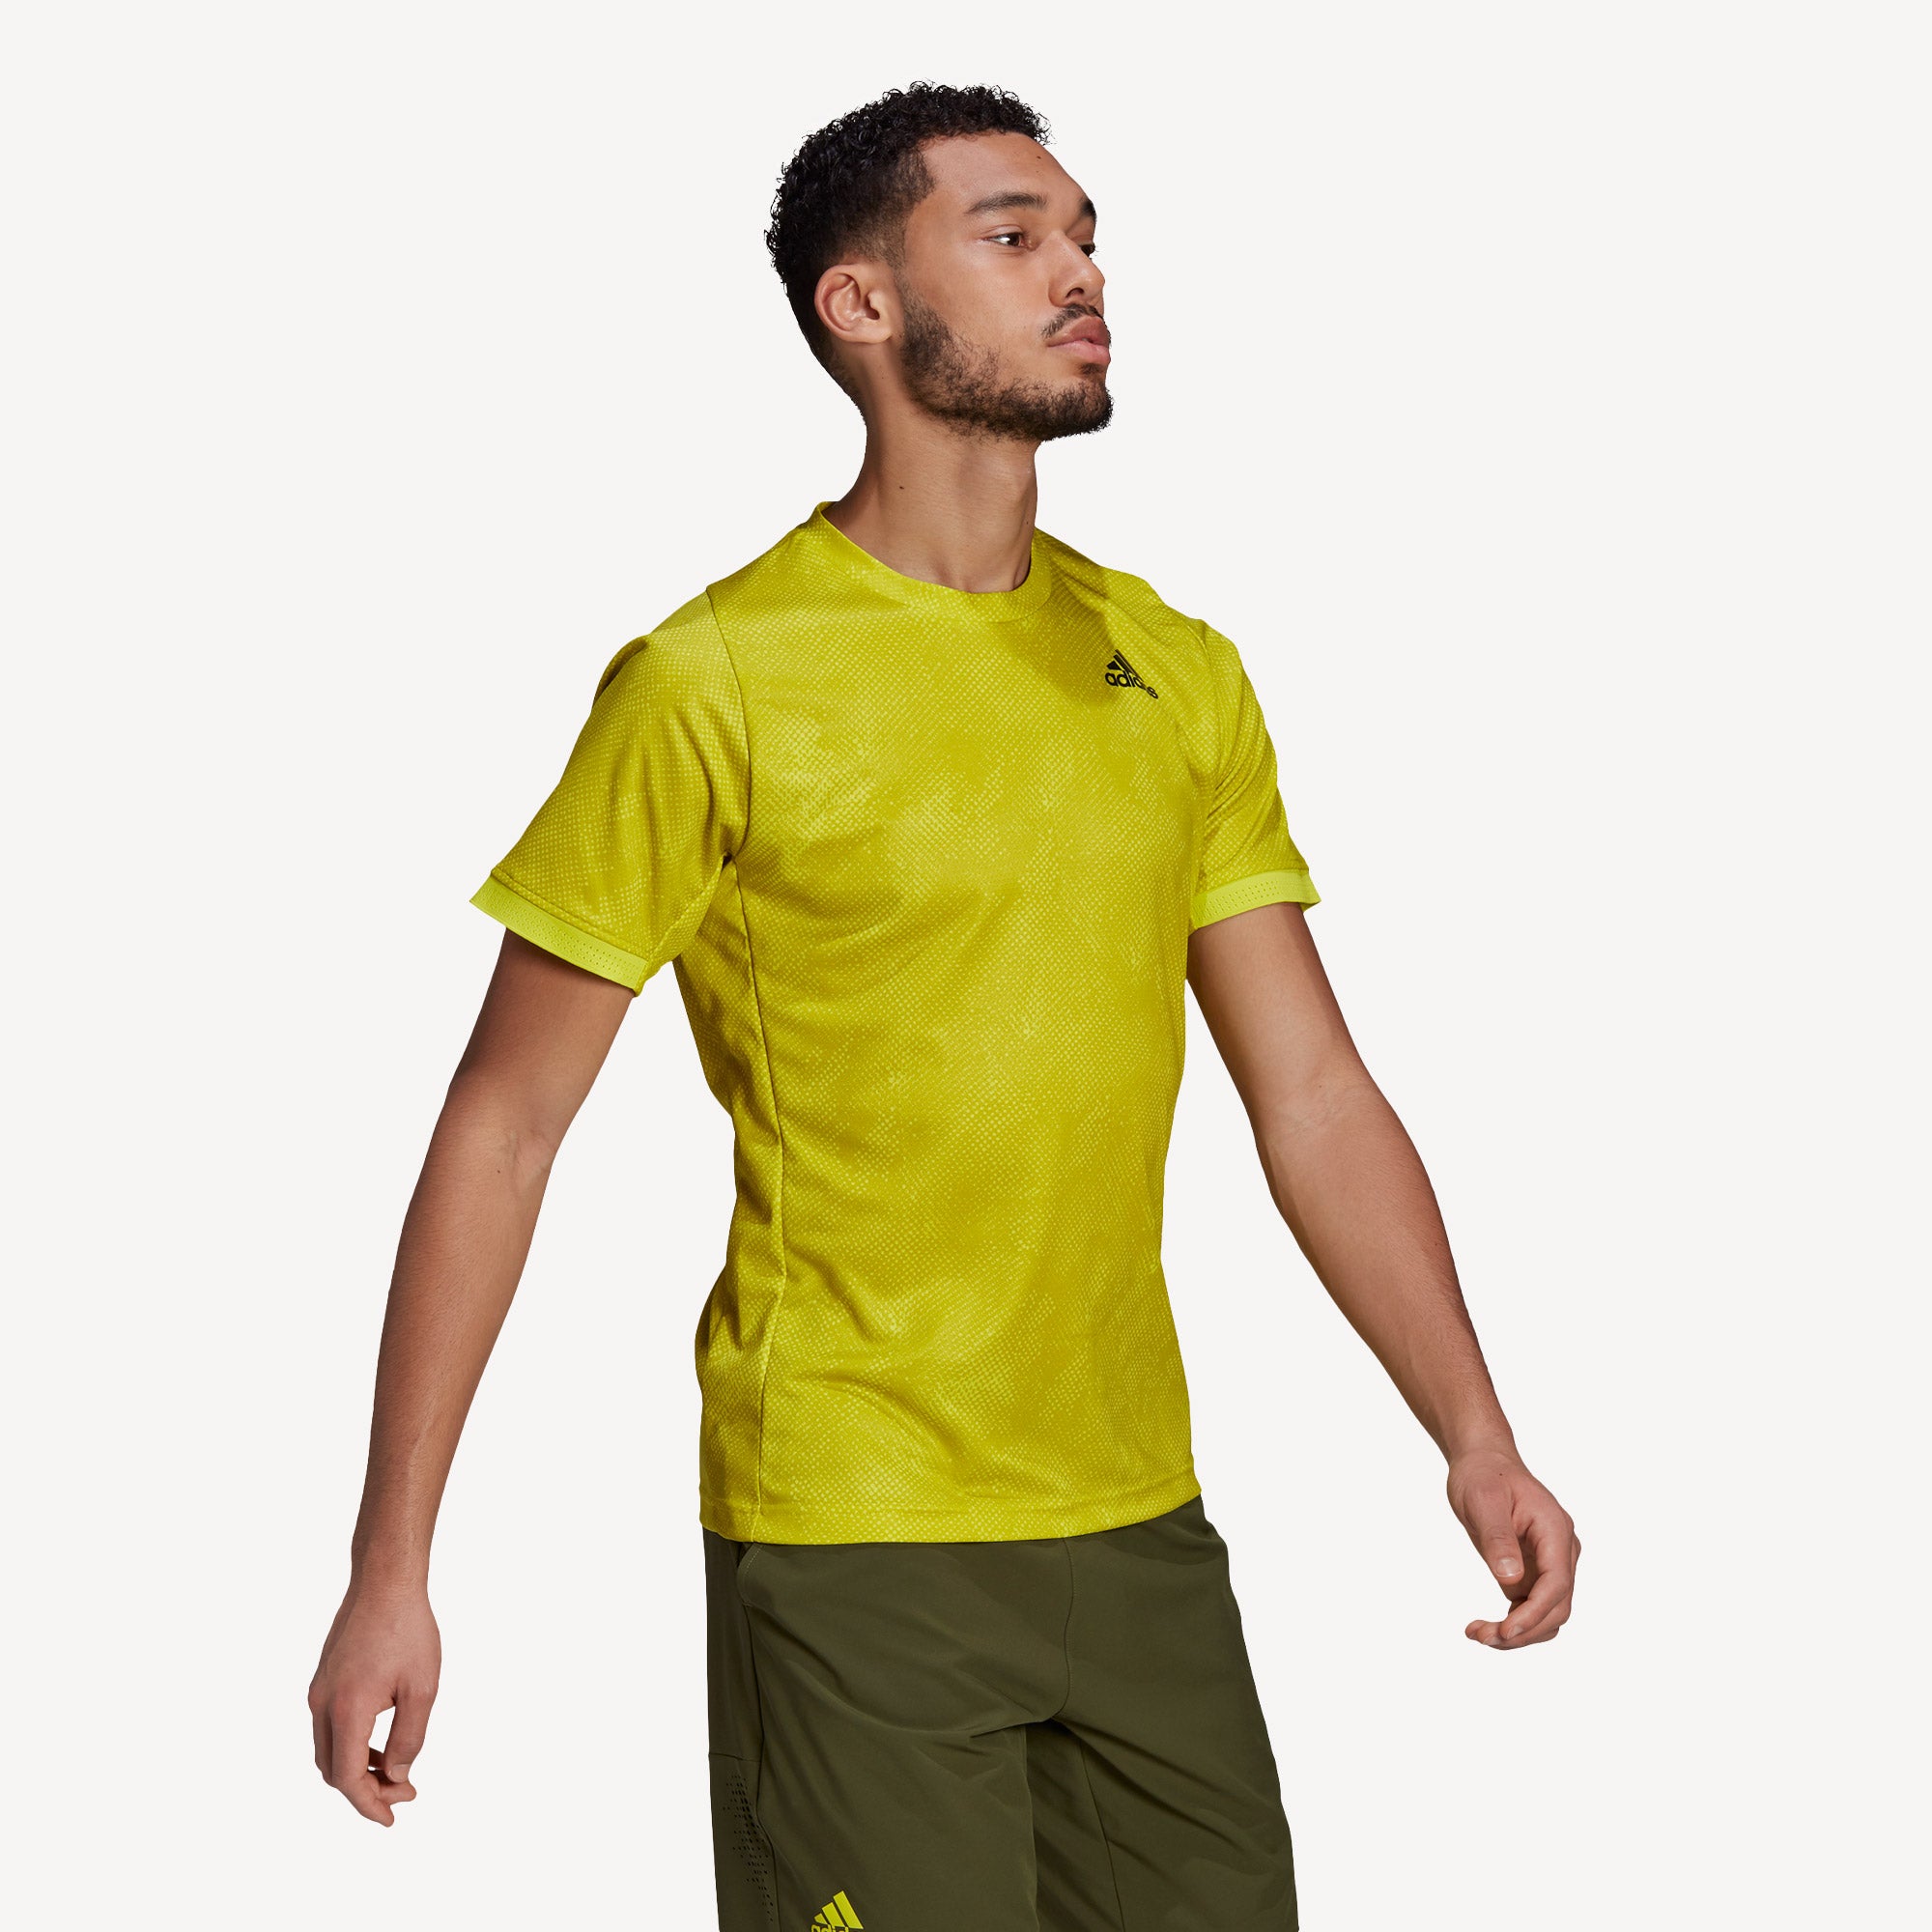 adidas Freelift Primeblue Men's Printed Tennis Shirt Yellow (3)